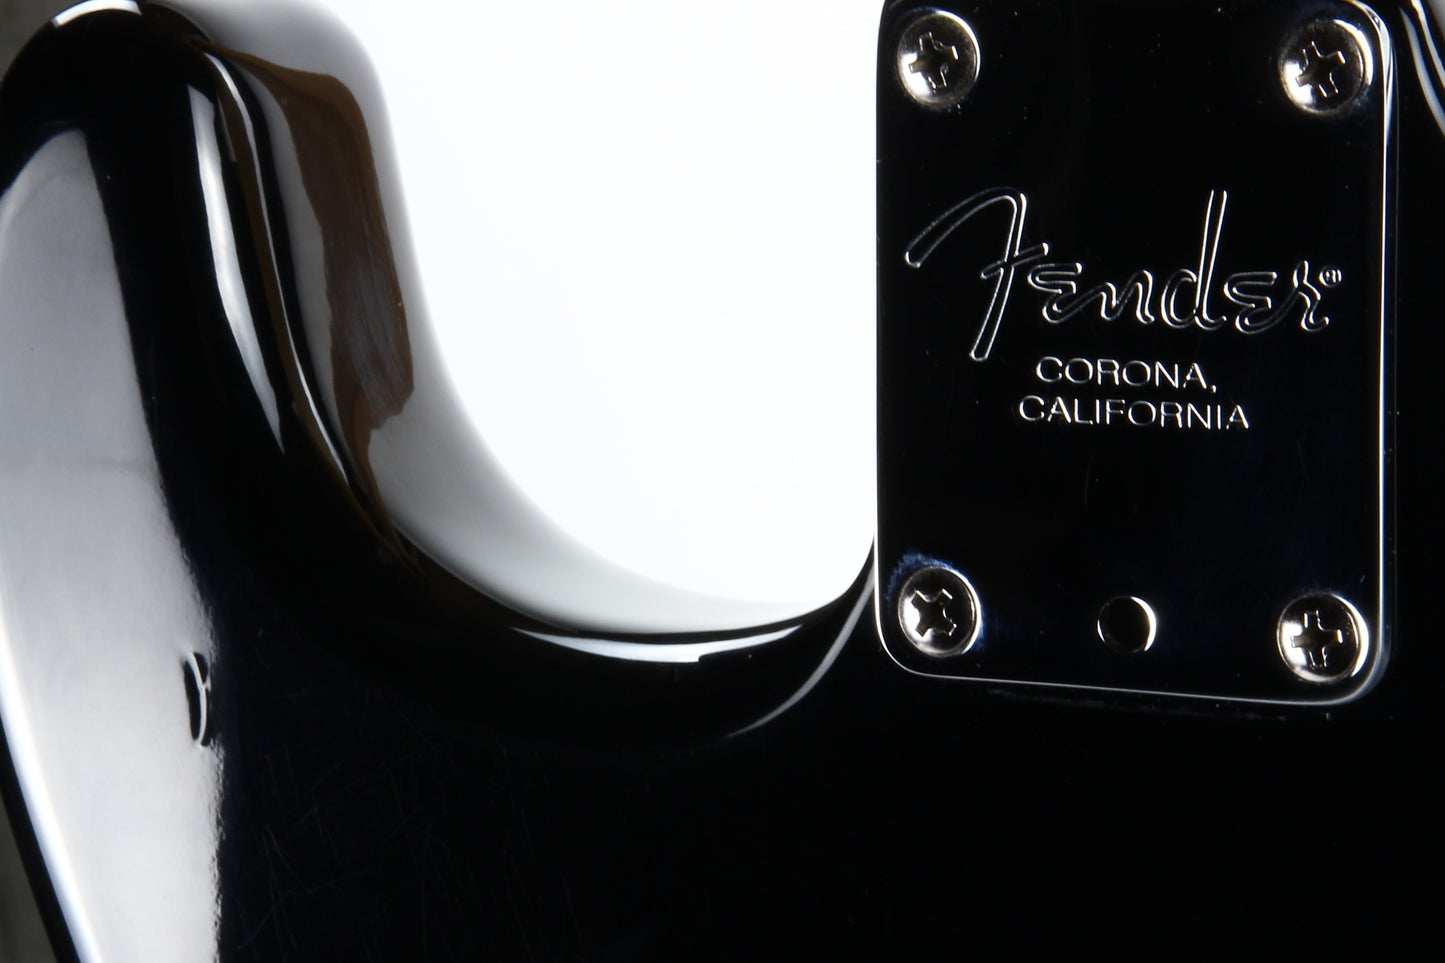 2007 Fender American Standard Stratocaster USA - Black, Hand-Wired David Allen Voodoo ‘69 Pickup Assembly!